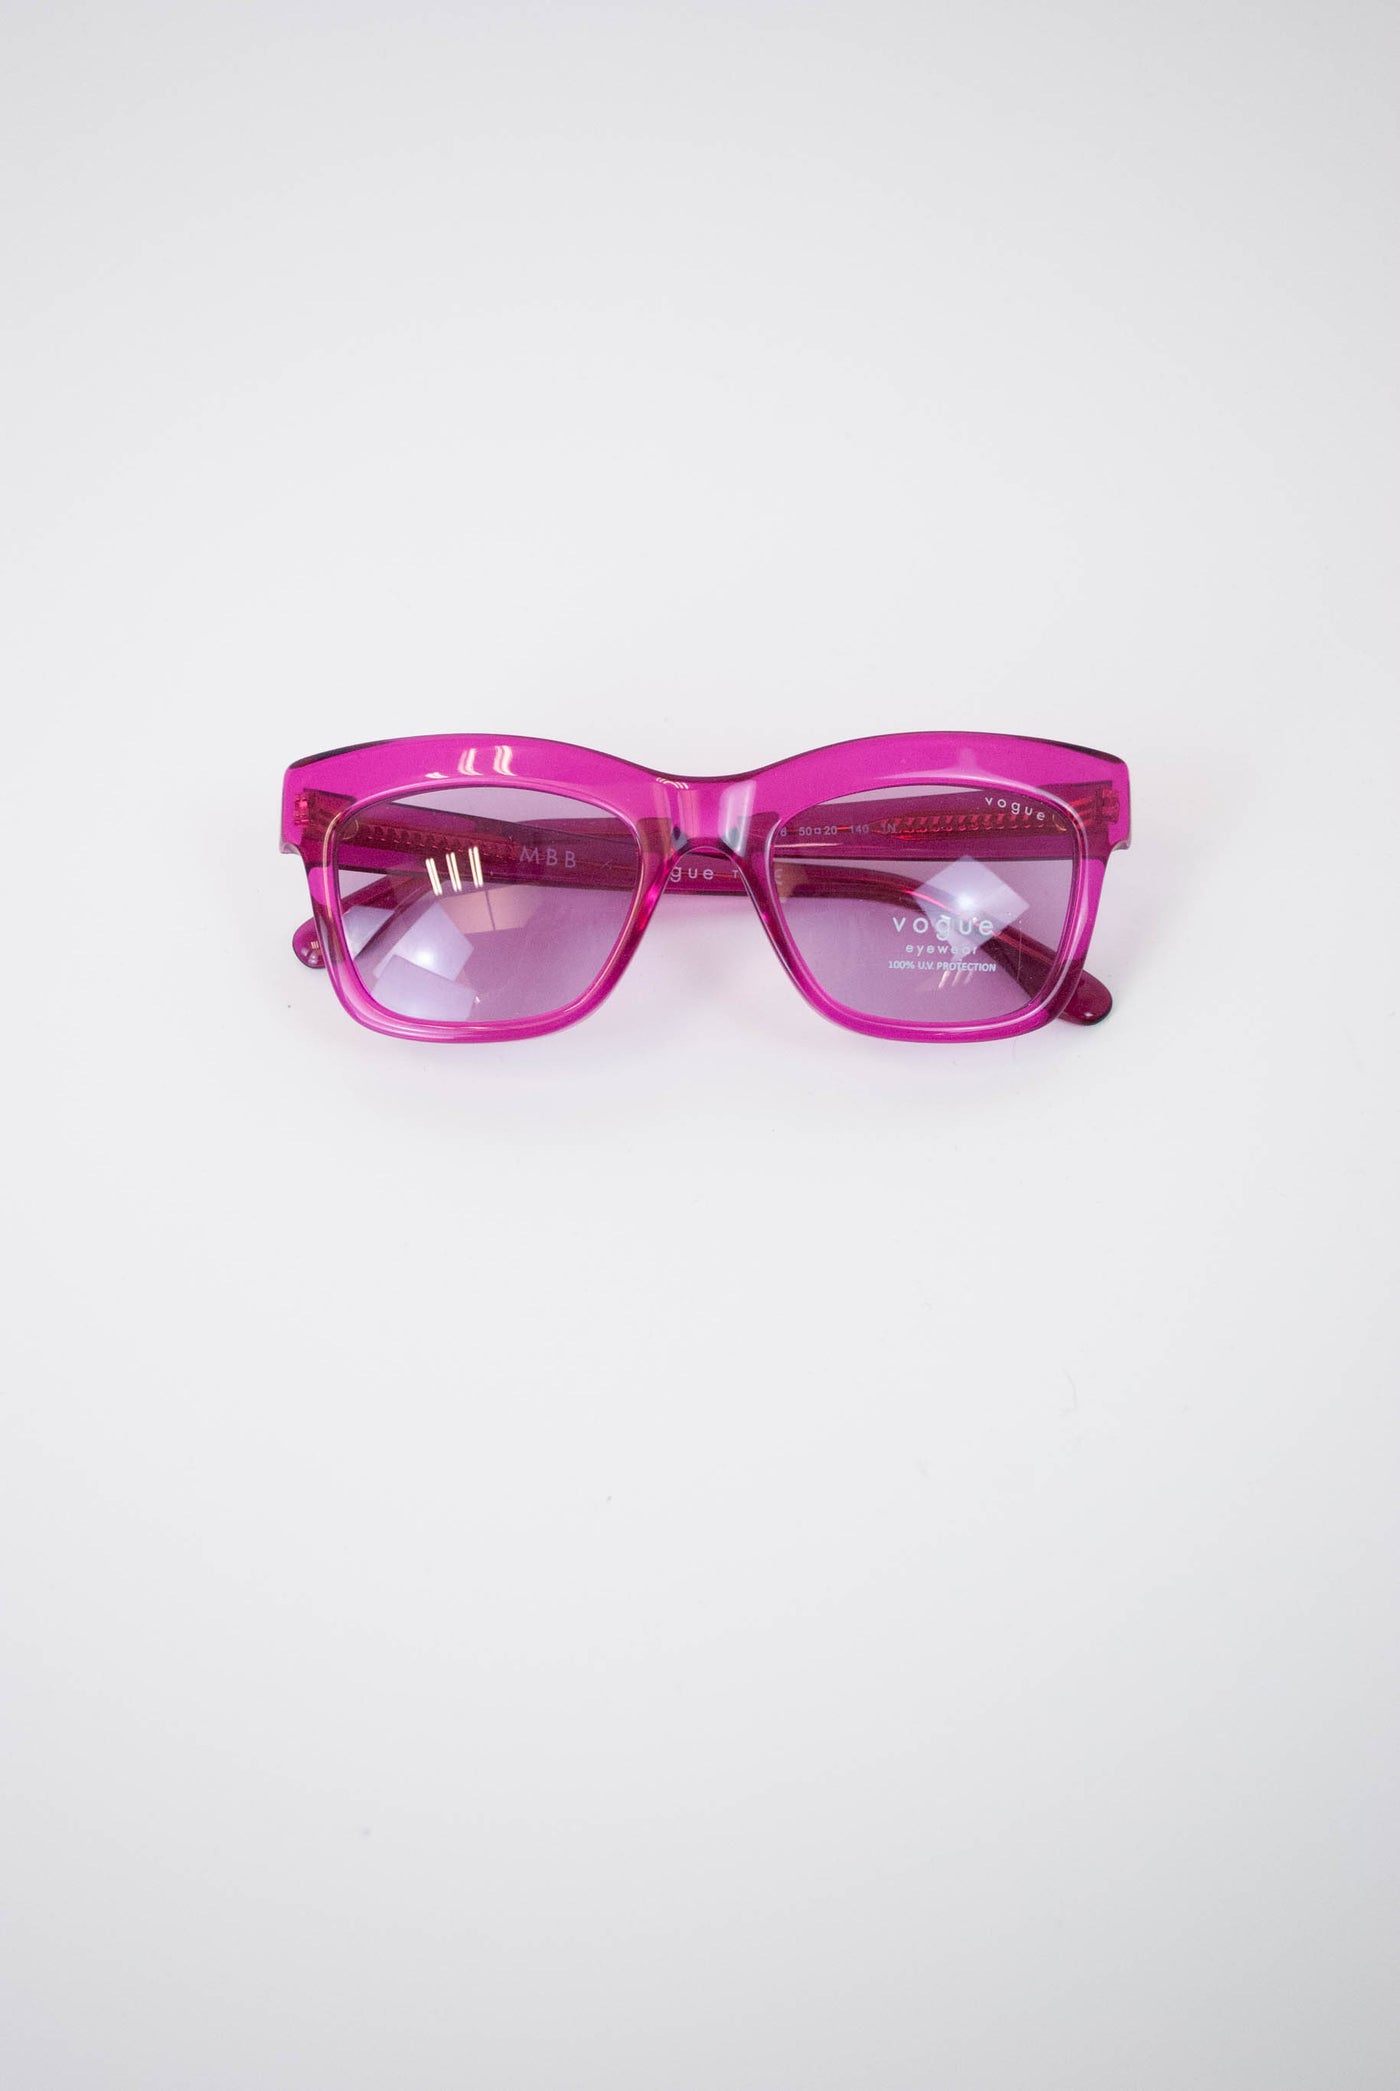 Gafas rosa semitrasparente